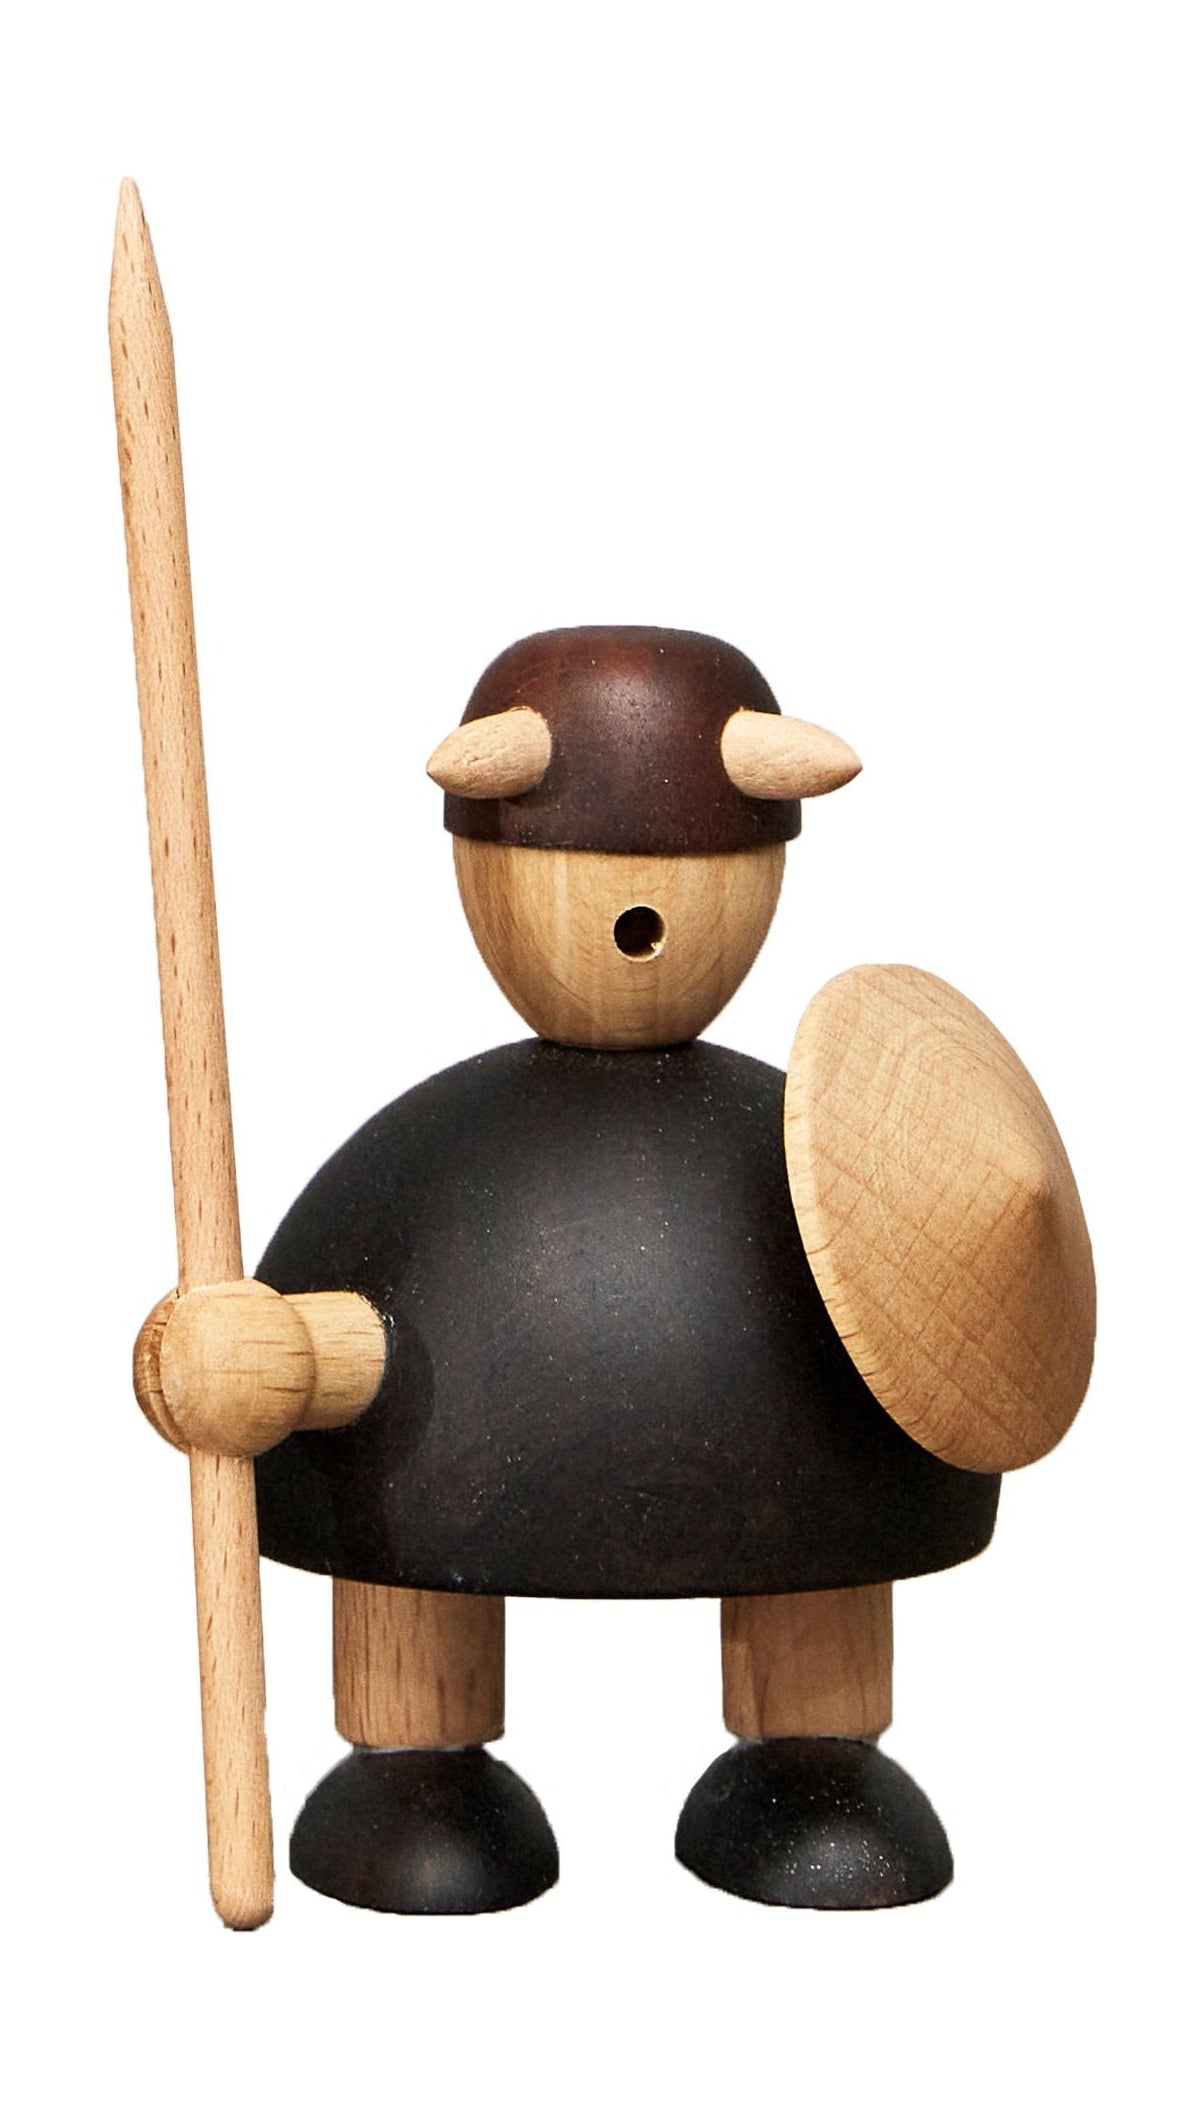 Andersen Furniture Les Vikings de la figure en bois du Danemark, petit